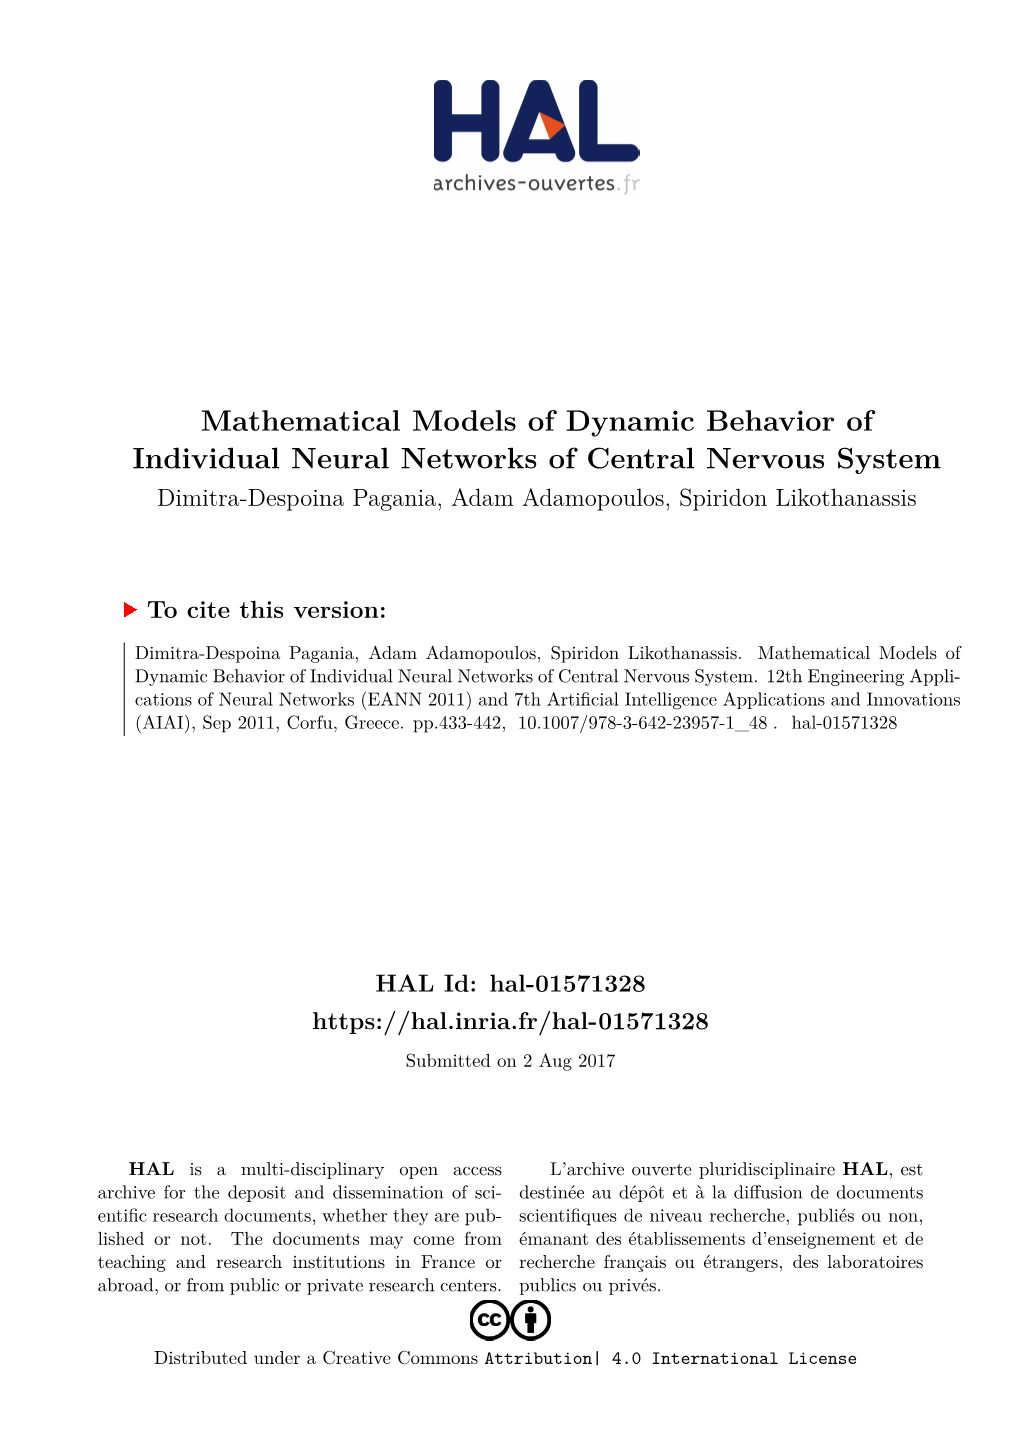 Mathematical Models of Dynamic Behavior of Individual Neural Networks of Central Nervous System Dimitra-Despoina Pagania, Adam Adamopoulos, Spiridon Likothanassis